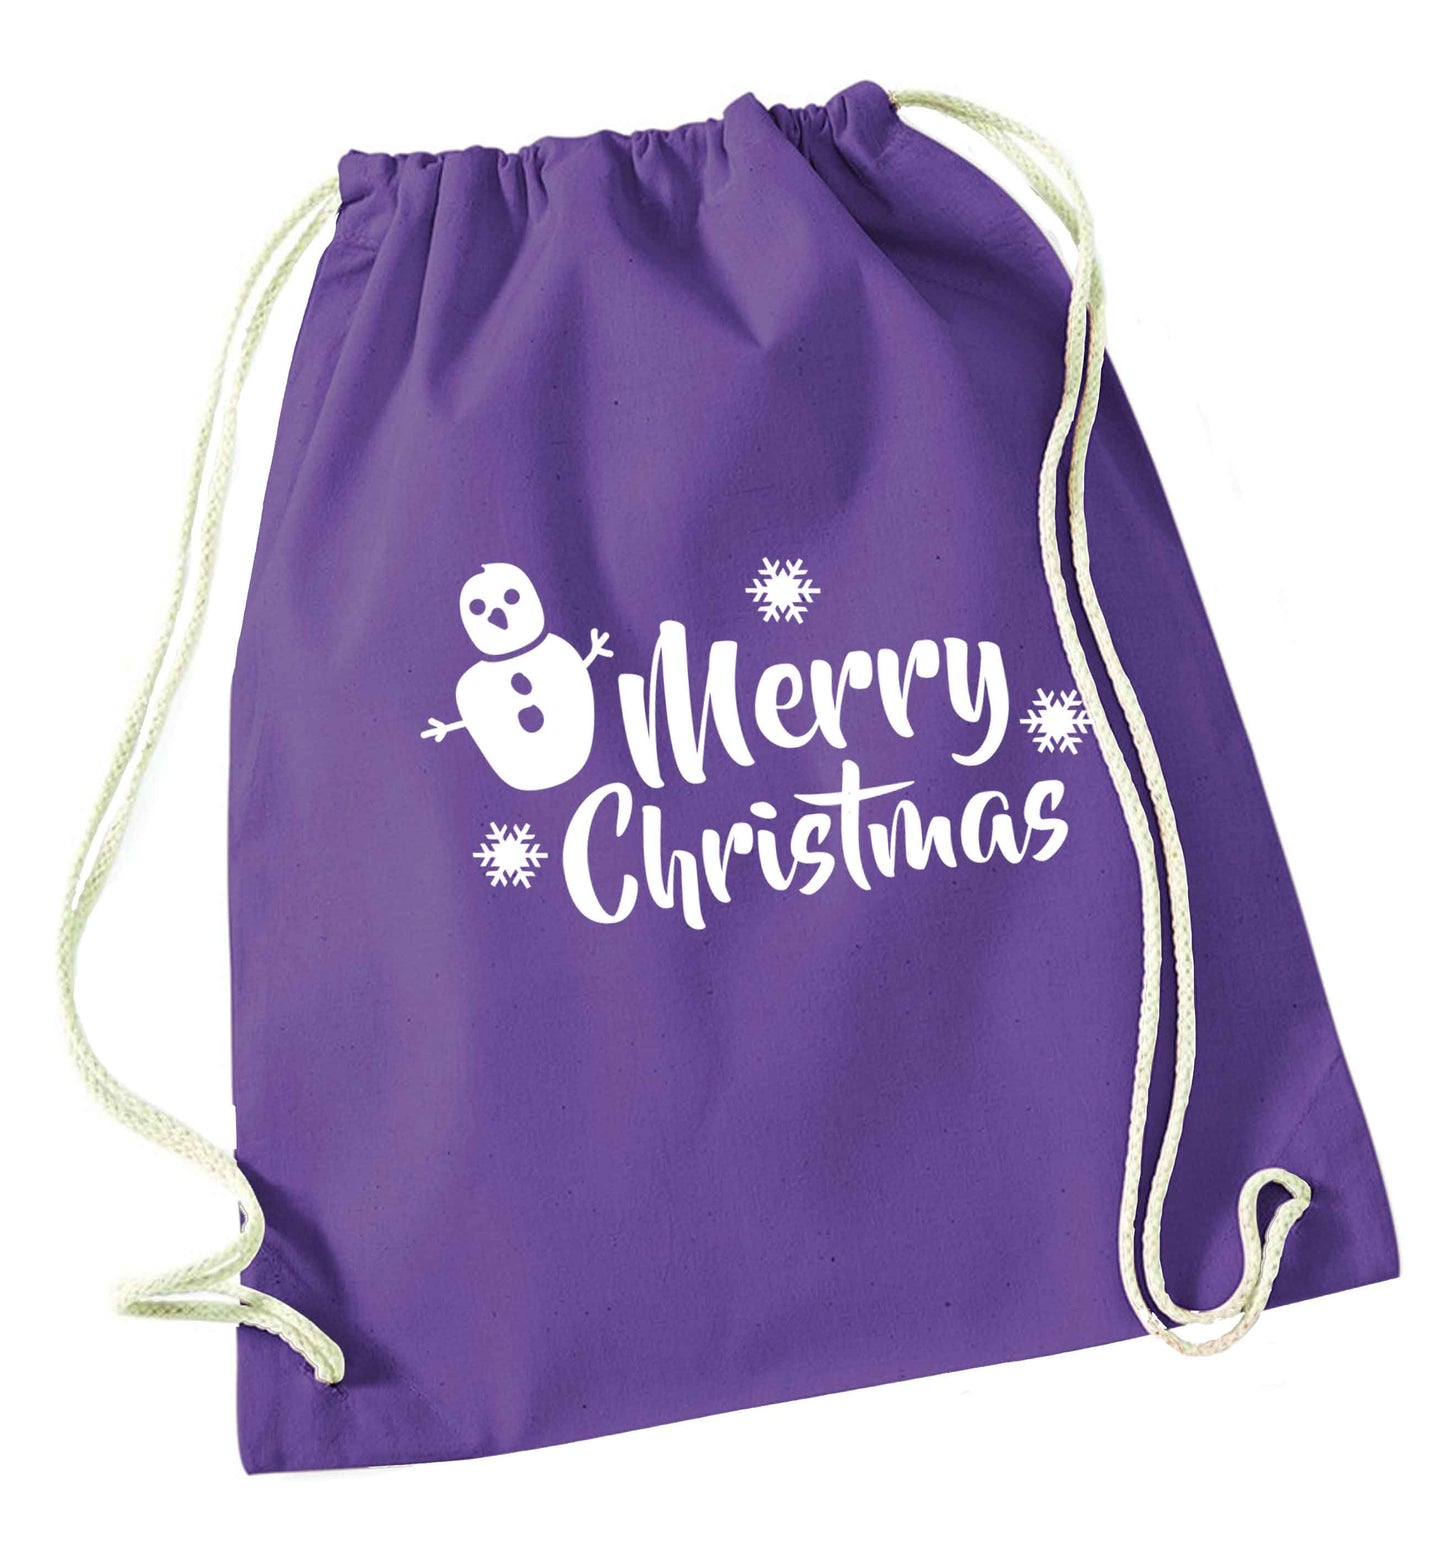 Merry Christmas - snowman purple drawstring bag